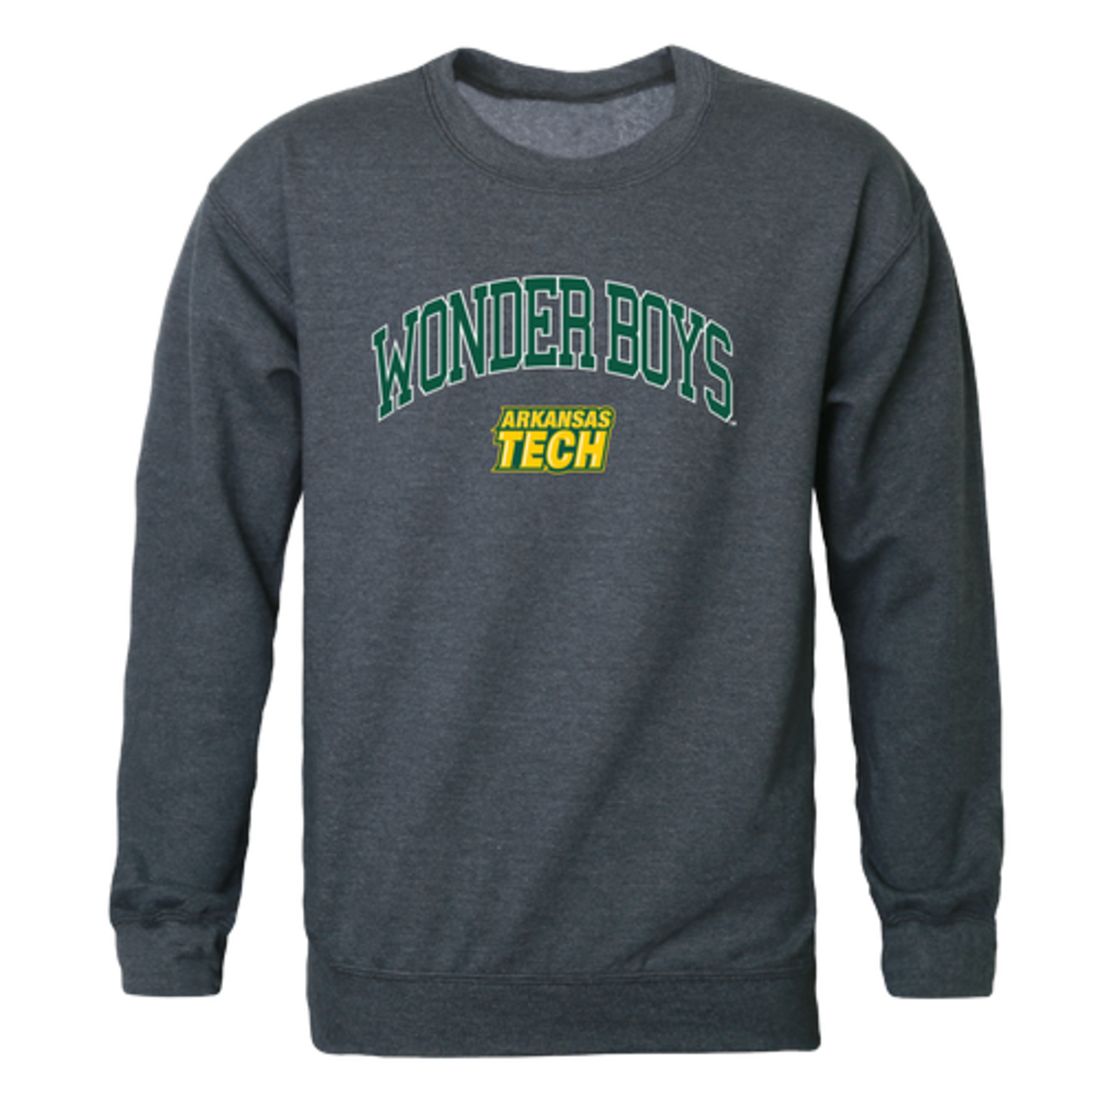 Arkansas-Tech-University-Wonder-Boys-Campus-Fleece-Crewneck-Pullover-Sweatshirt